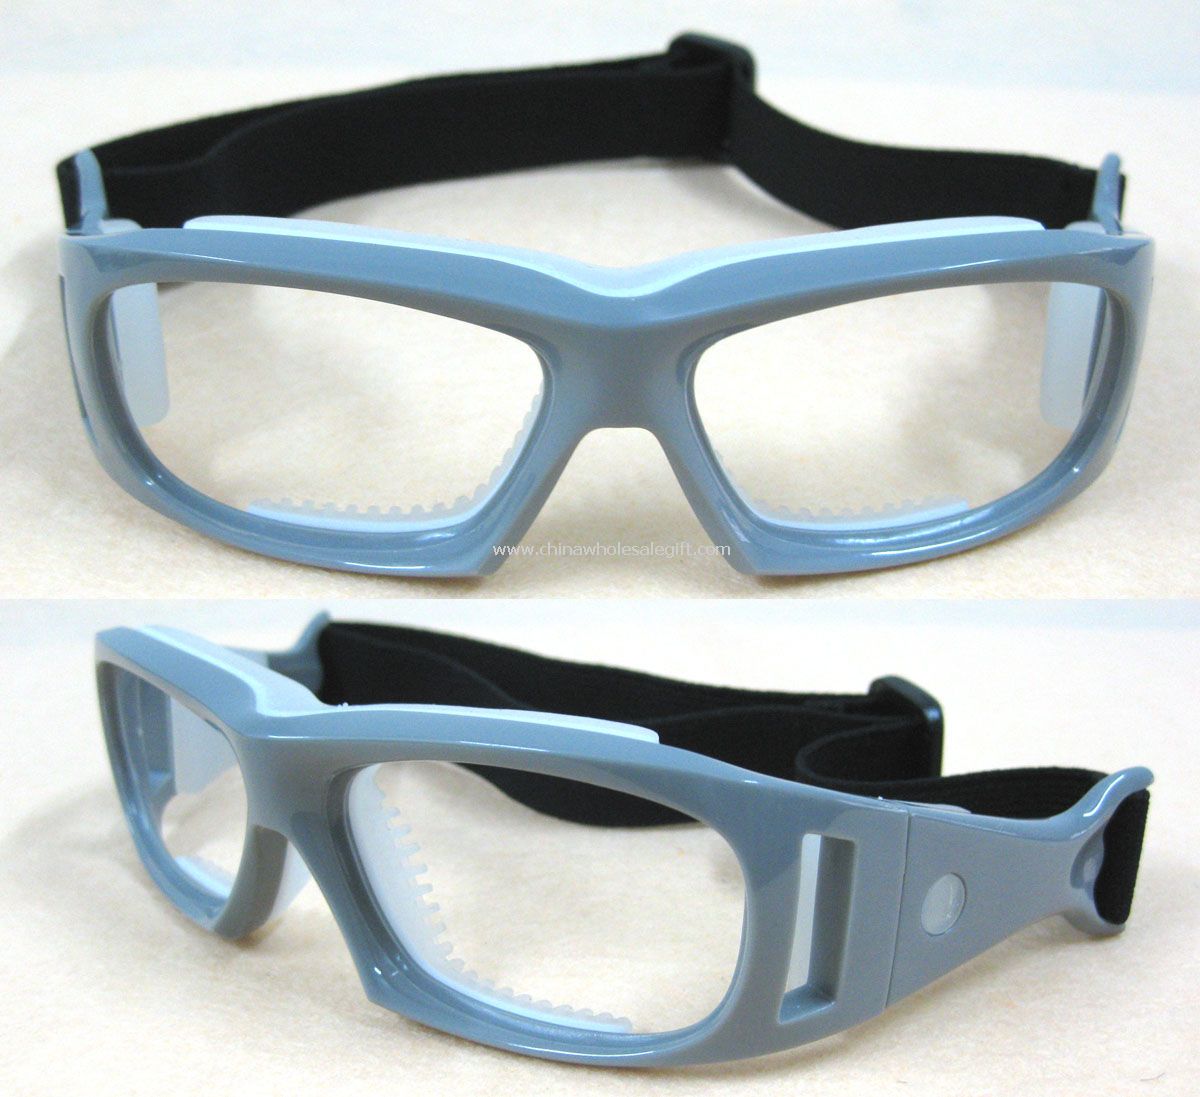 Basketball glasses